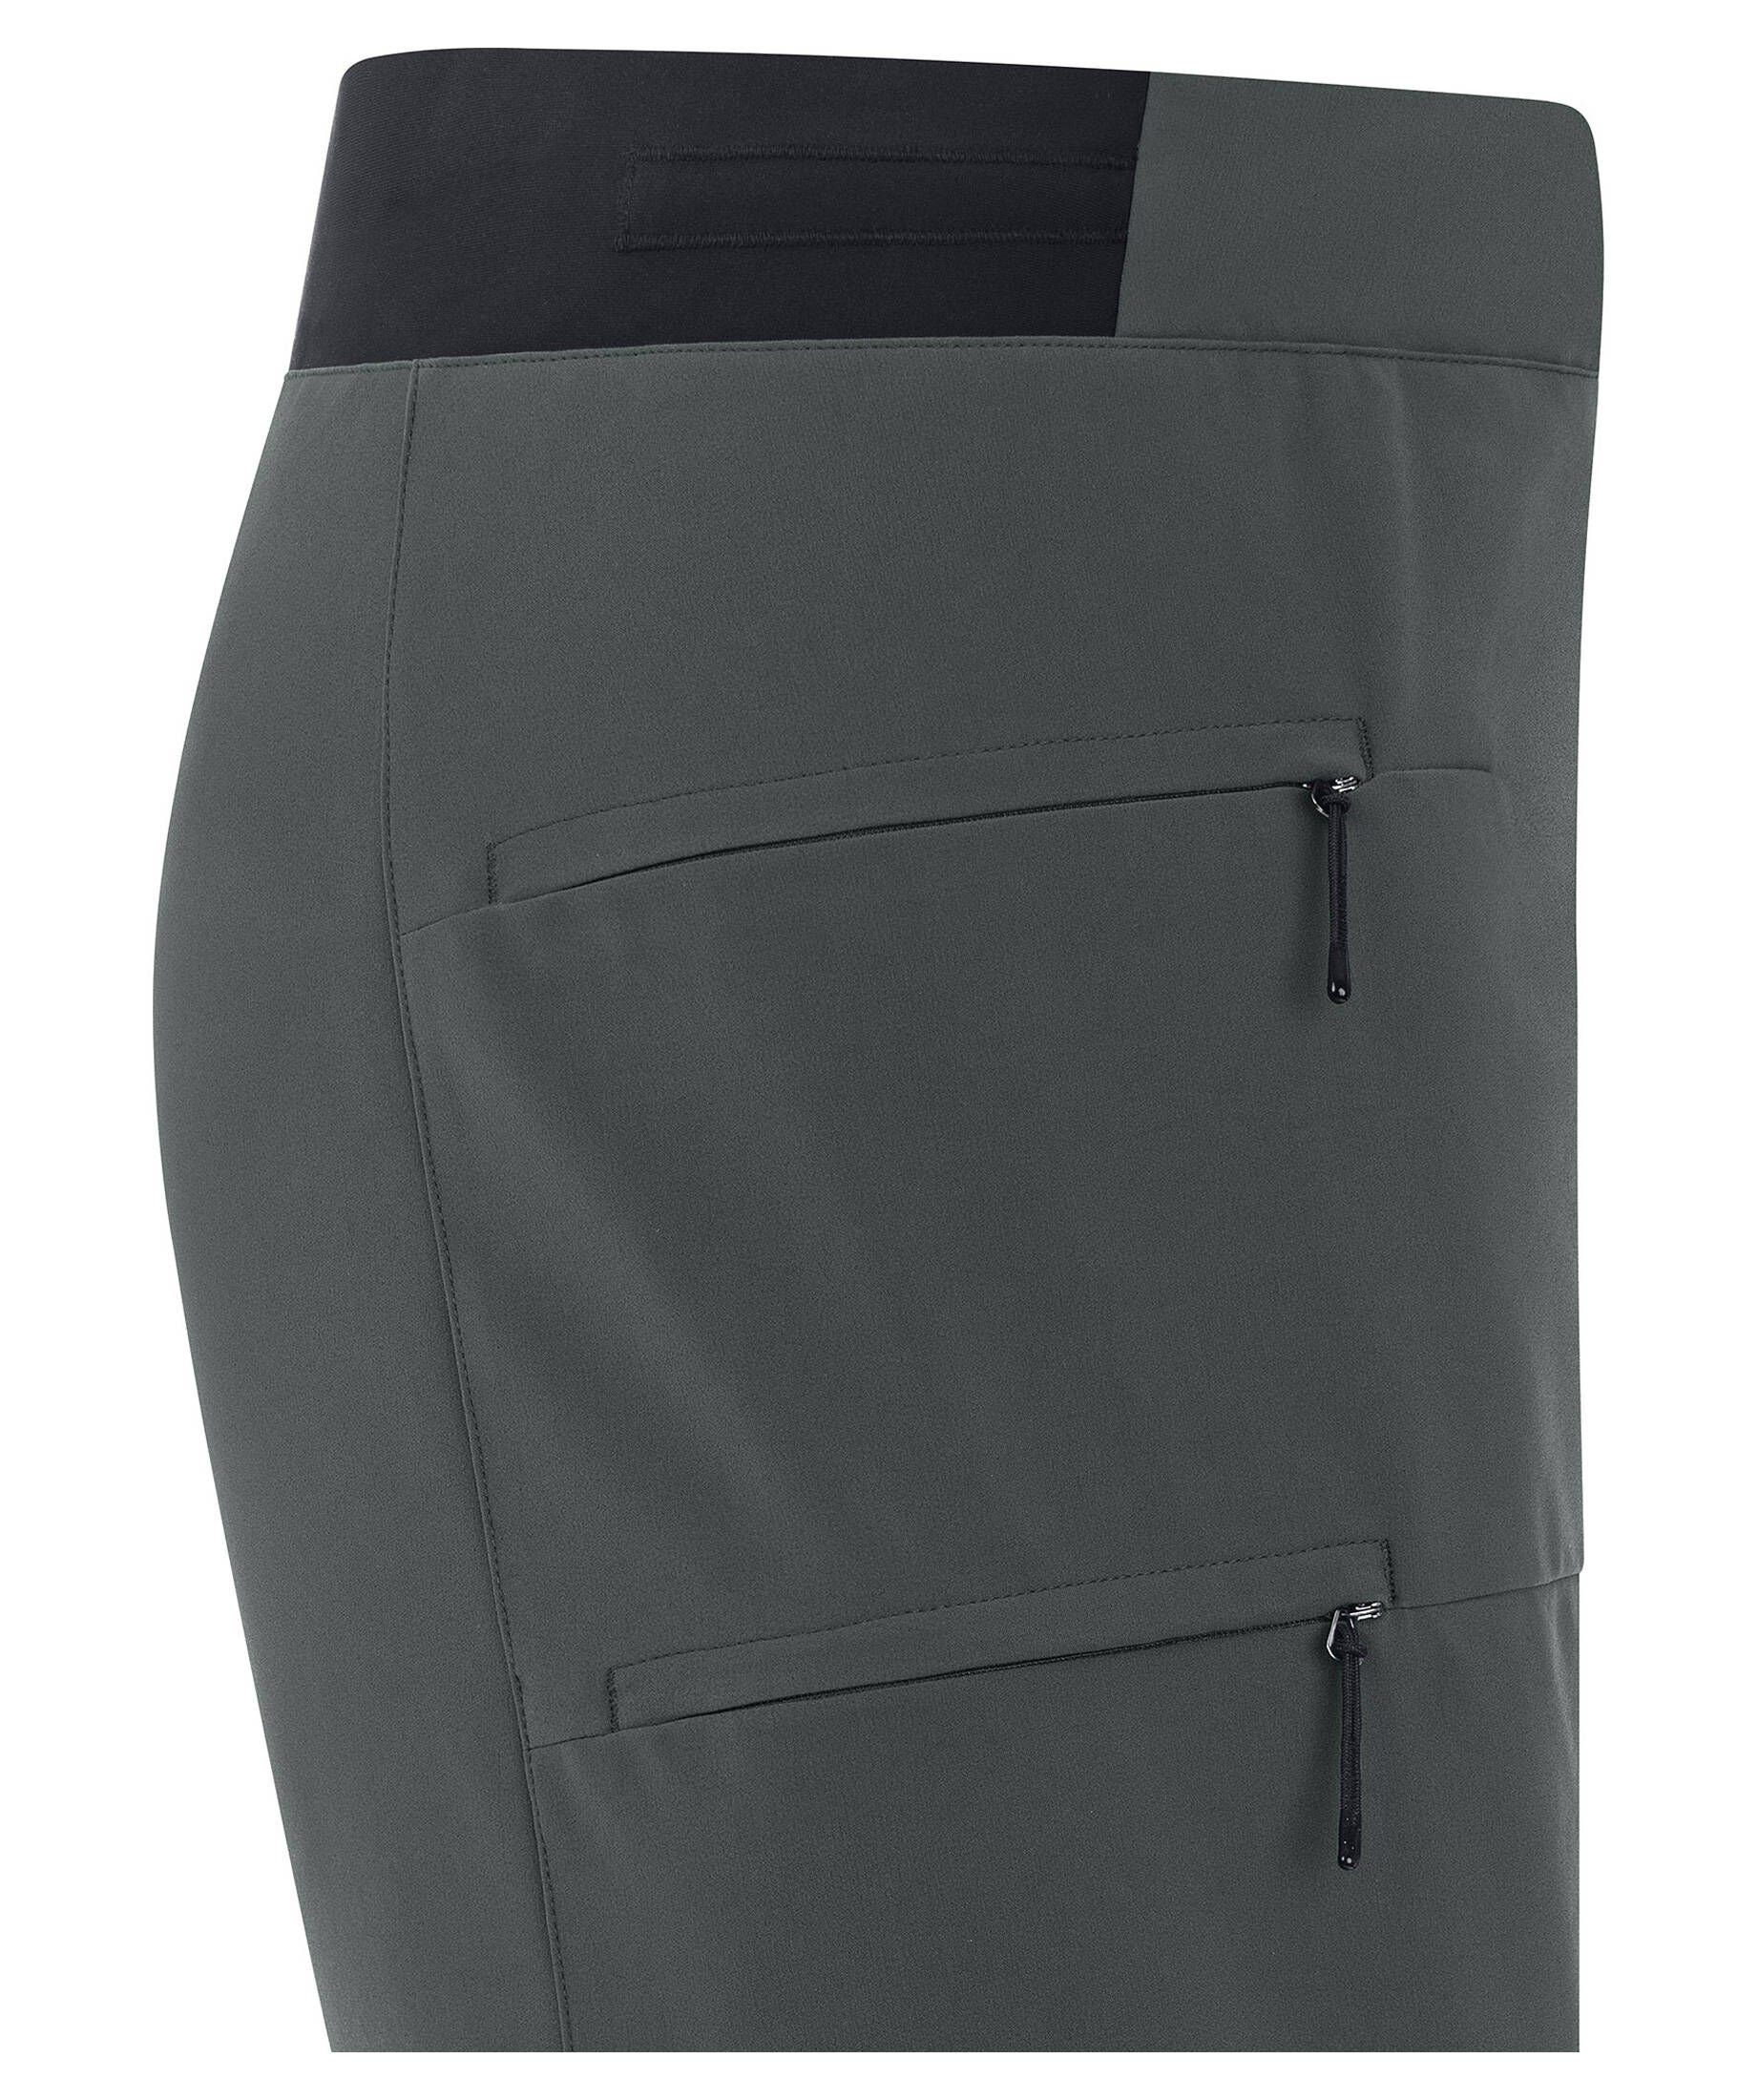 GORE® Radshorts olive Fahrradhose (1-tlg) Shorts" "Storm Wear (403) Damen